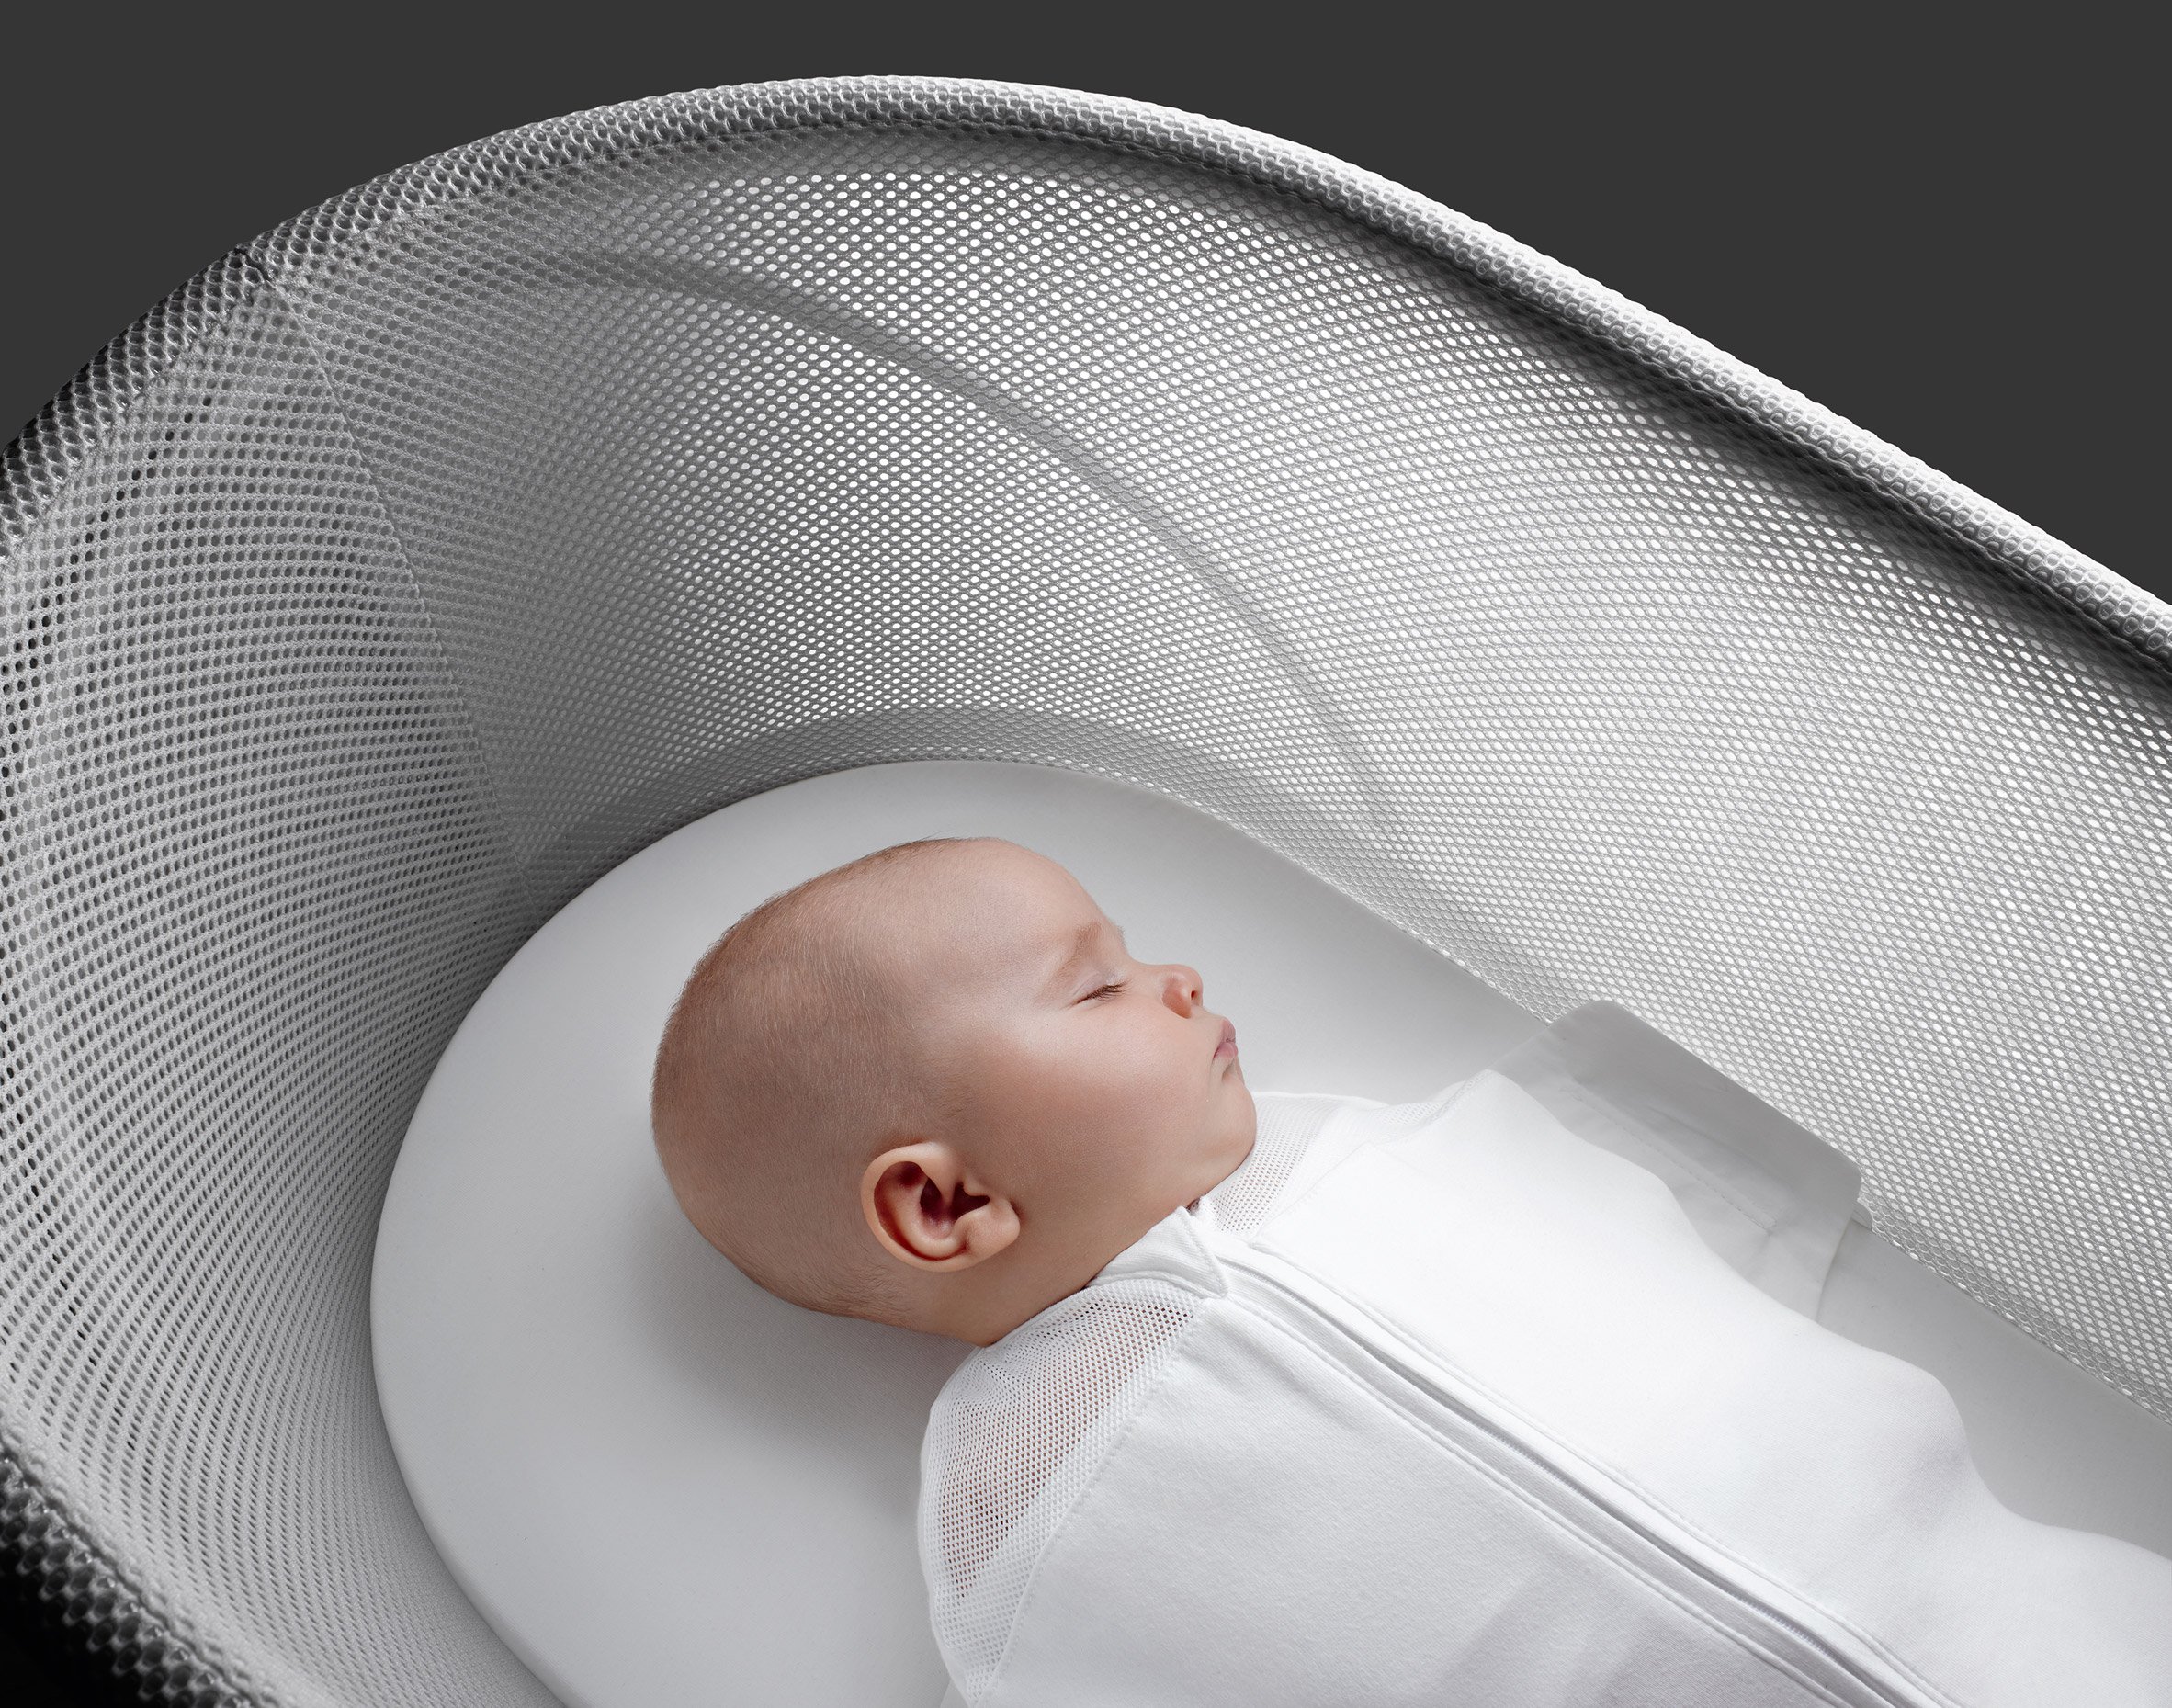 robotic-crib-for-happiest-baby-yves-behar-designs-childrens-furniture_dezeen_2364_col_3